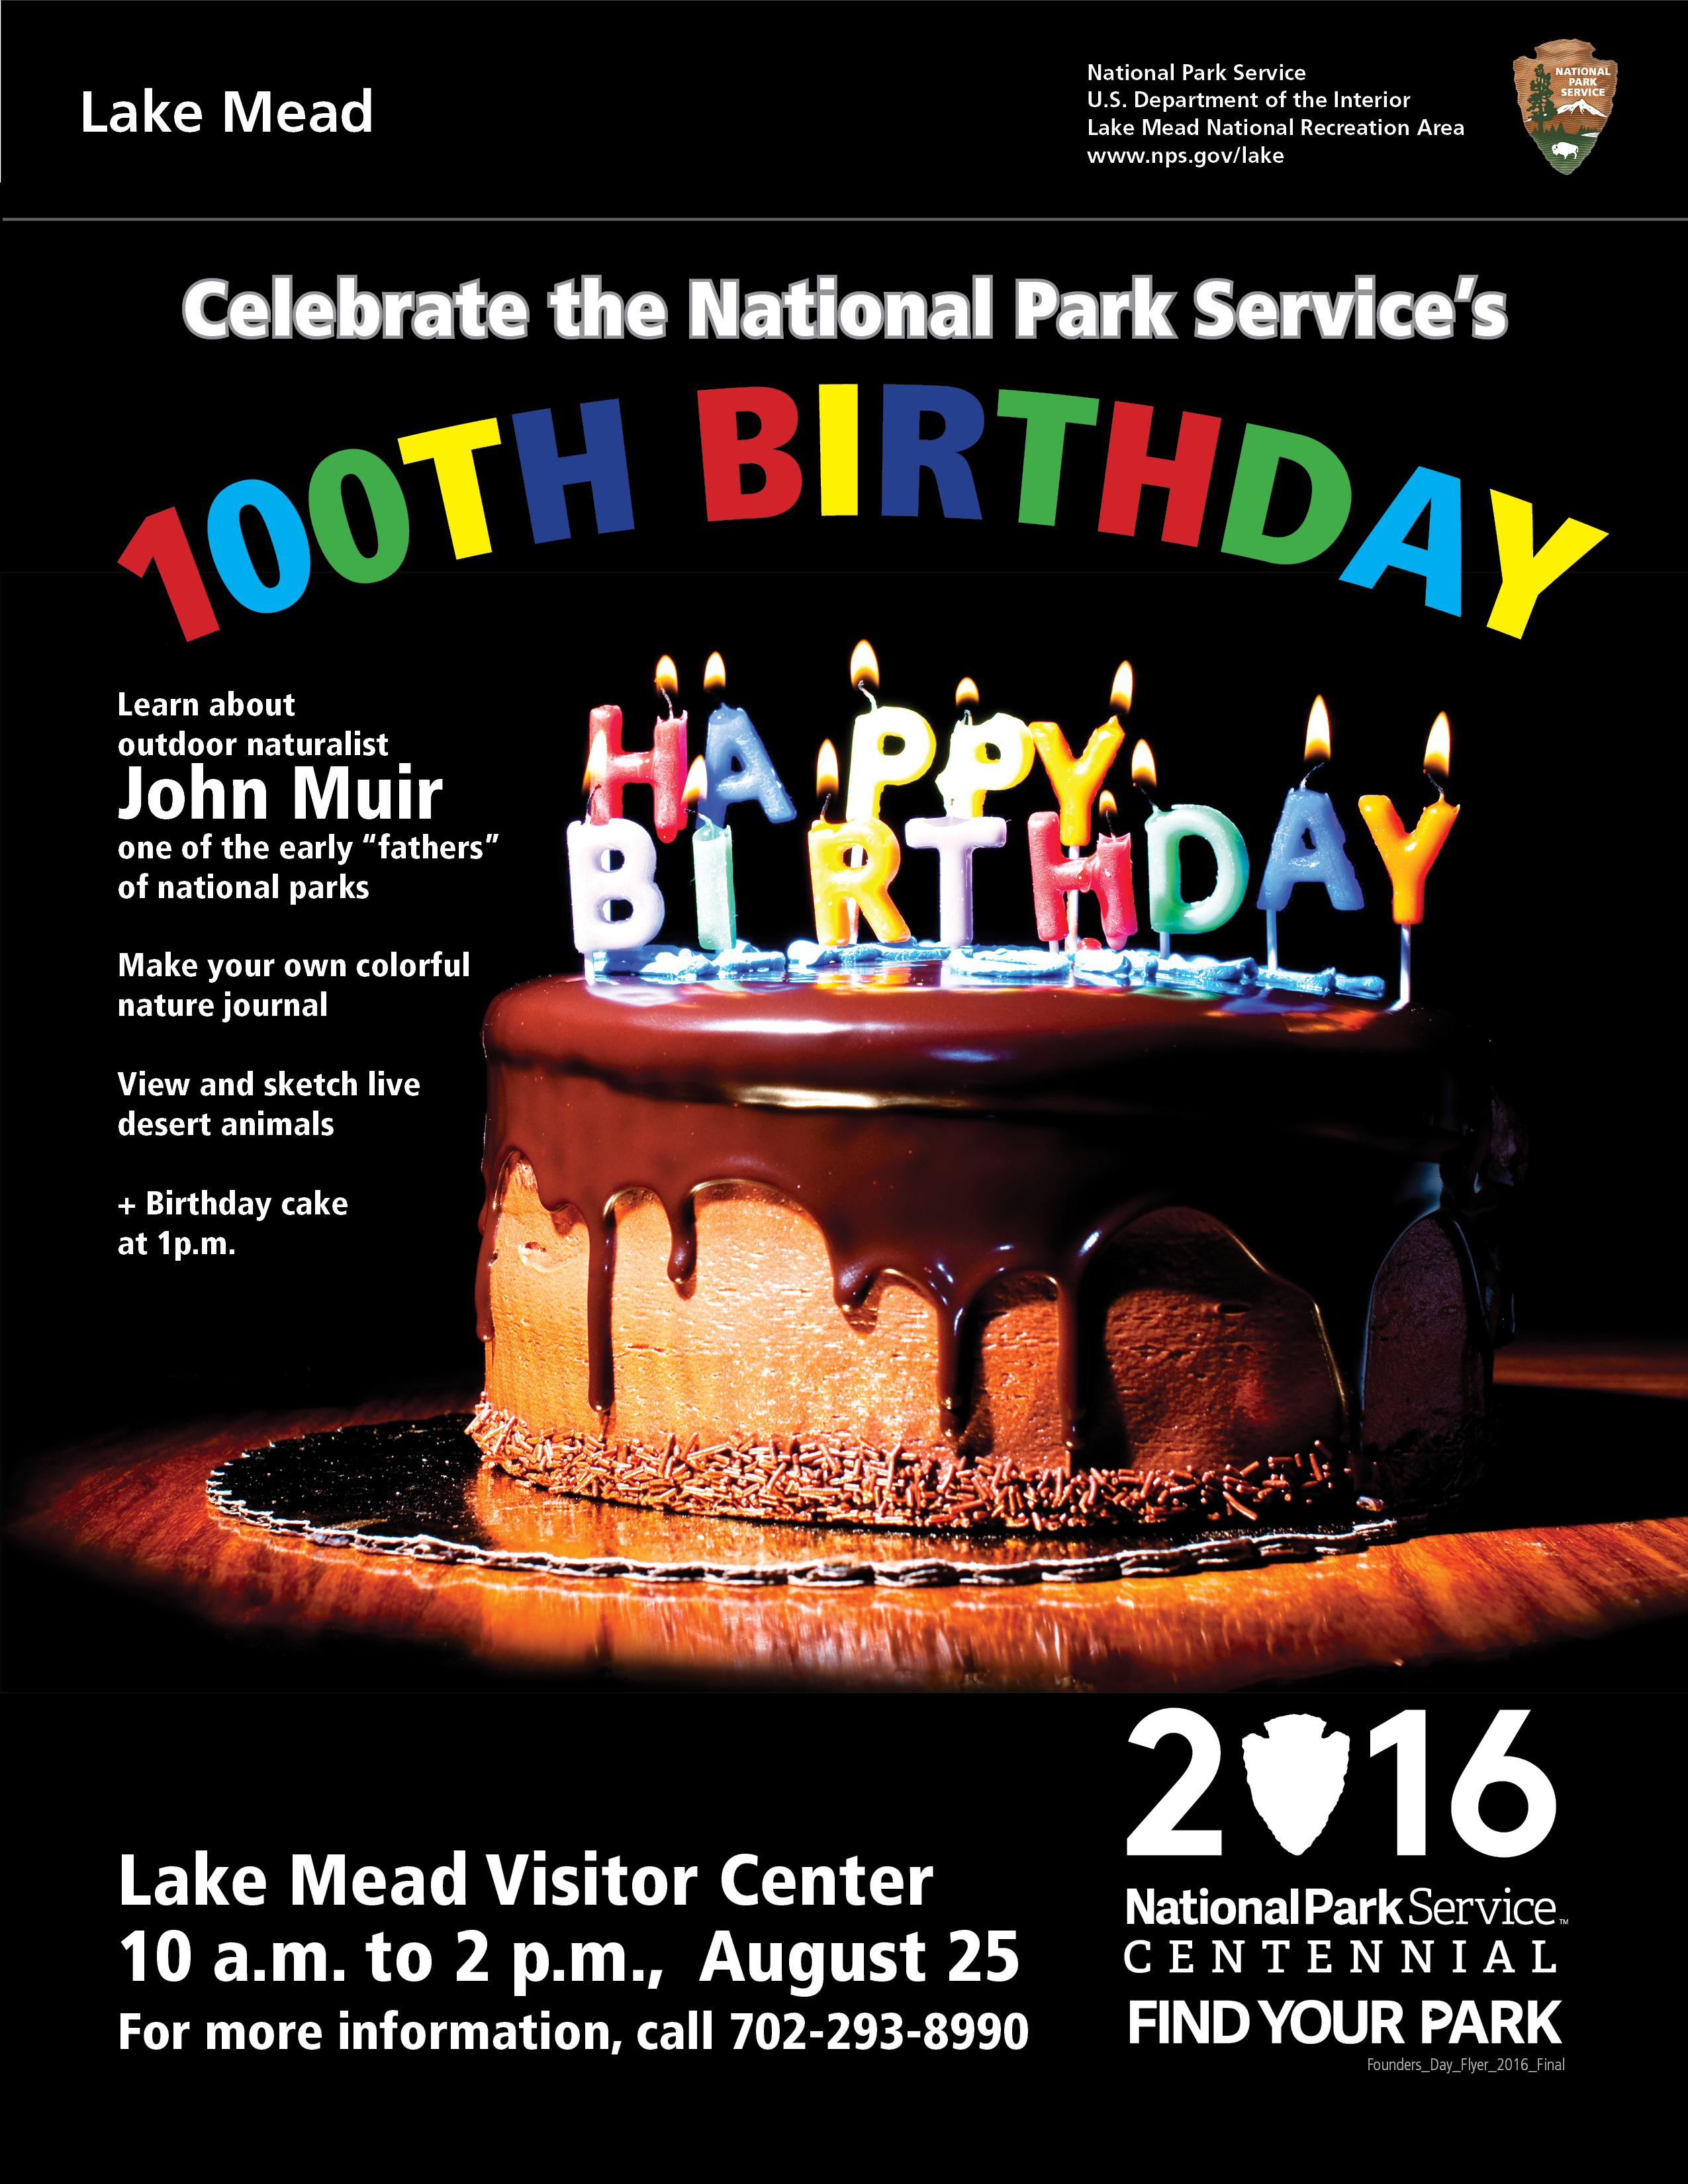 NATIONAL PARK SERVICE TURNS 100, AUG 25; LOCAL PARKS CELEBRATE Lake